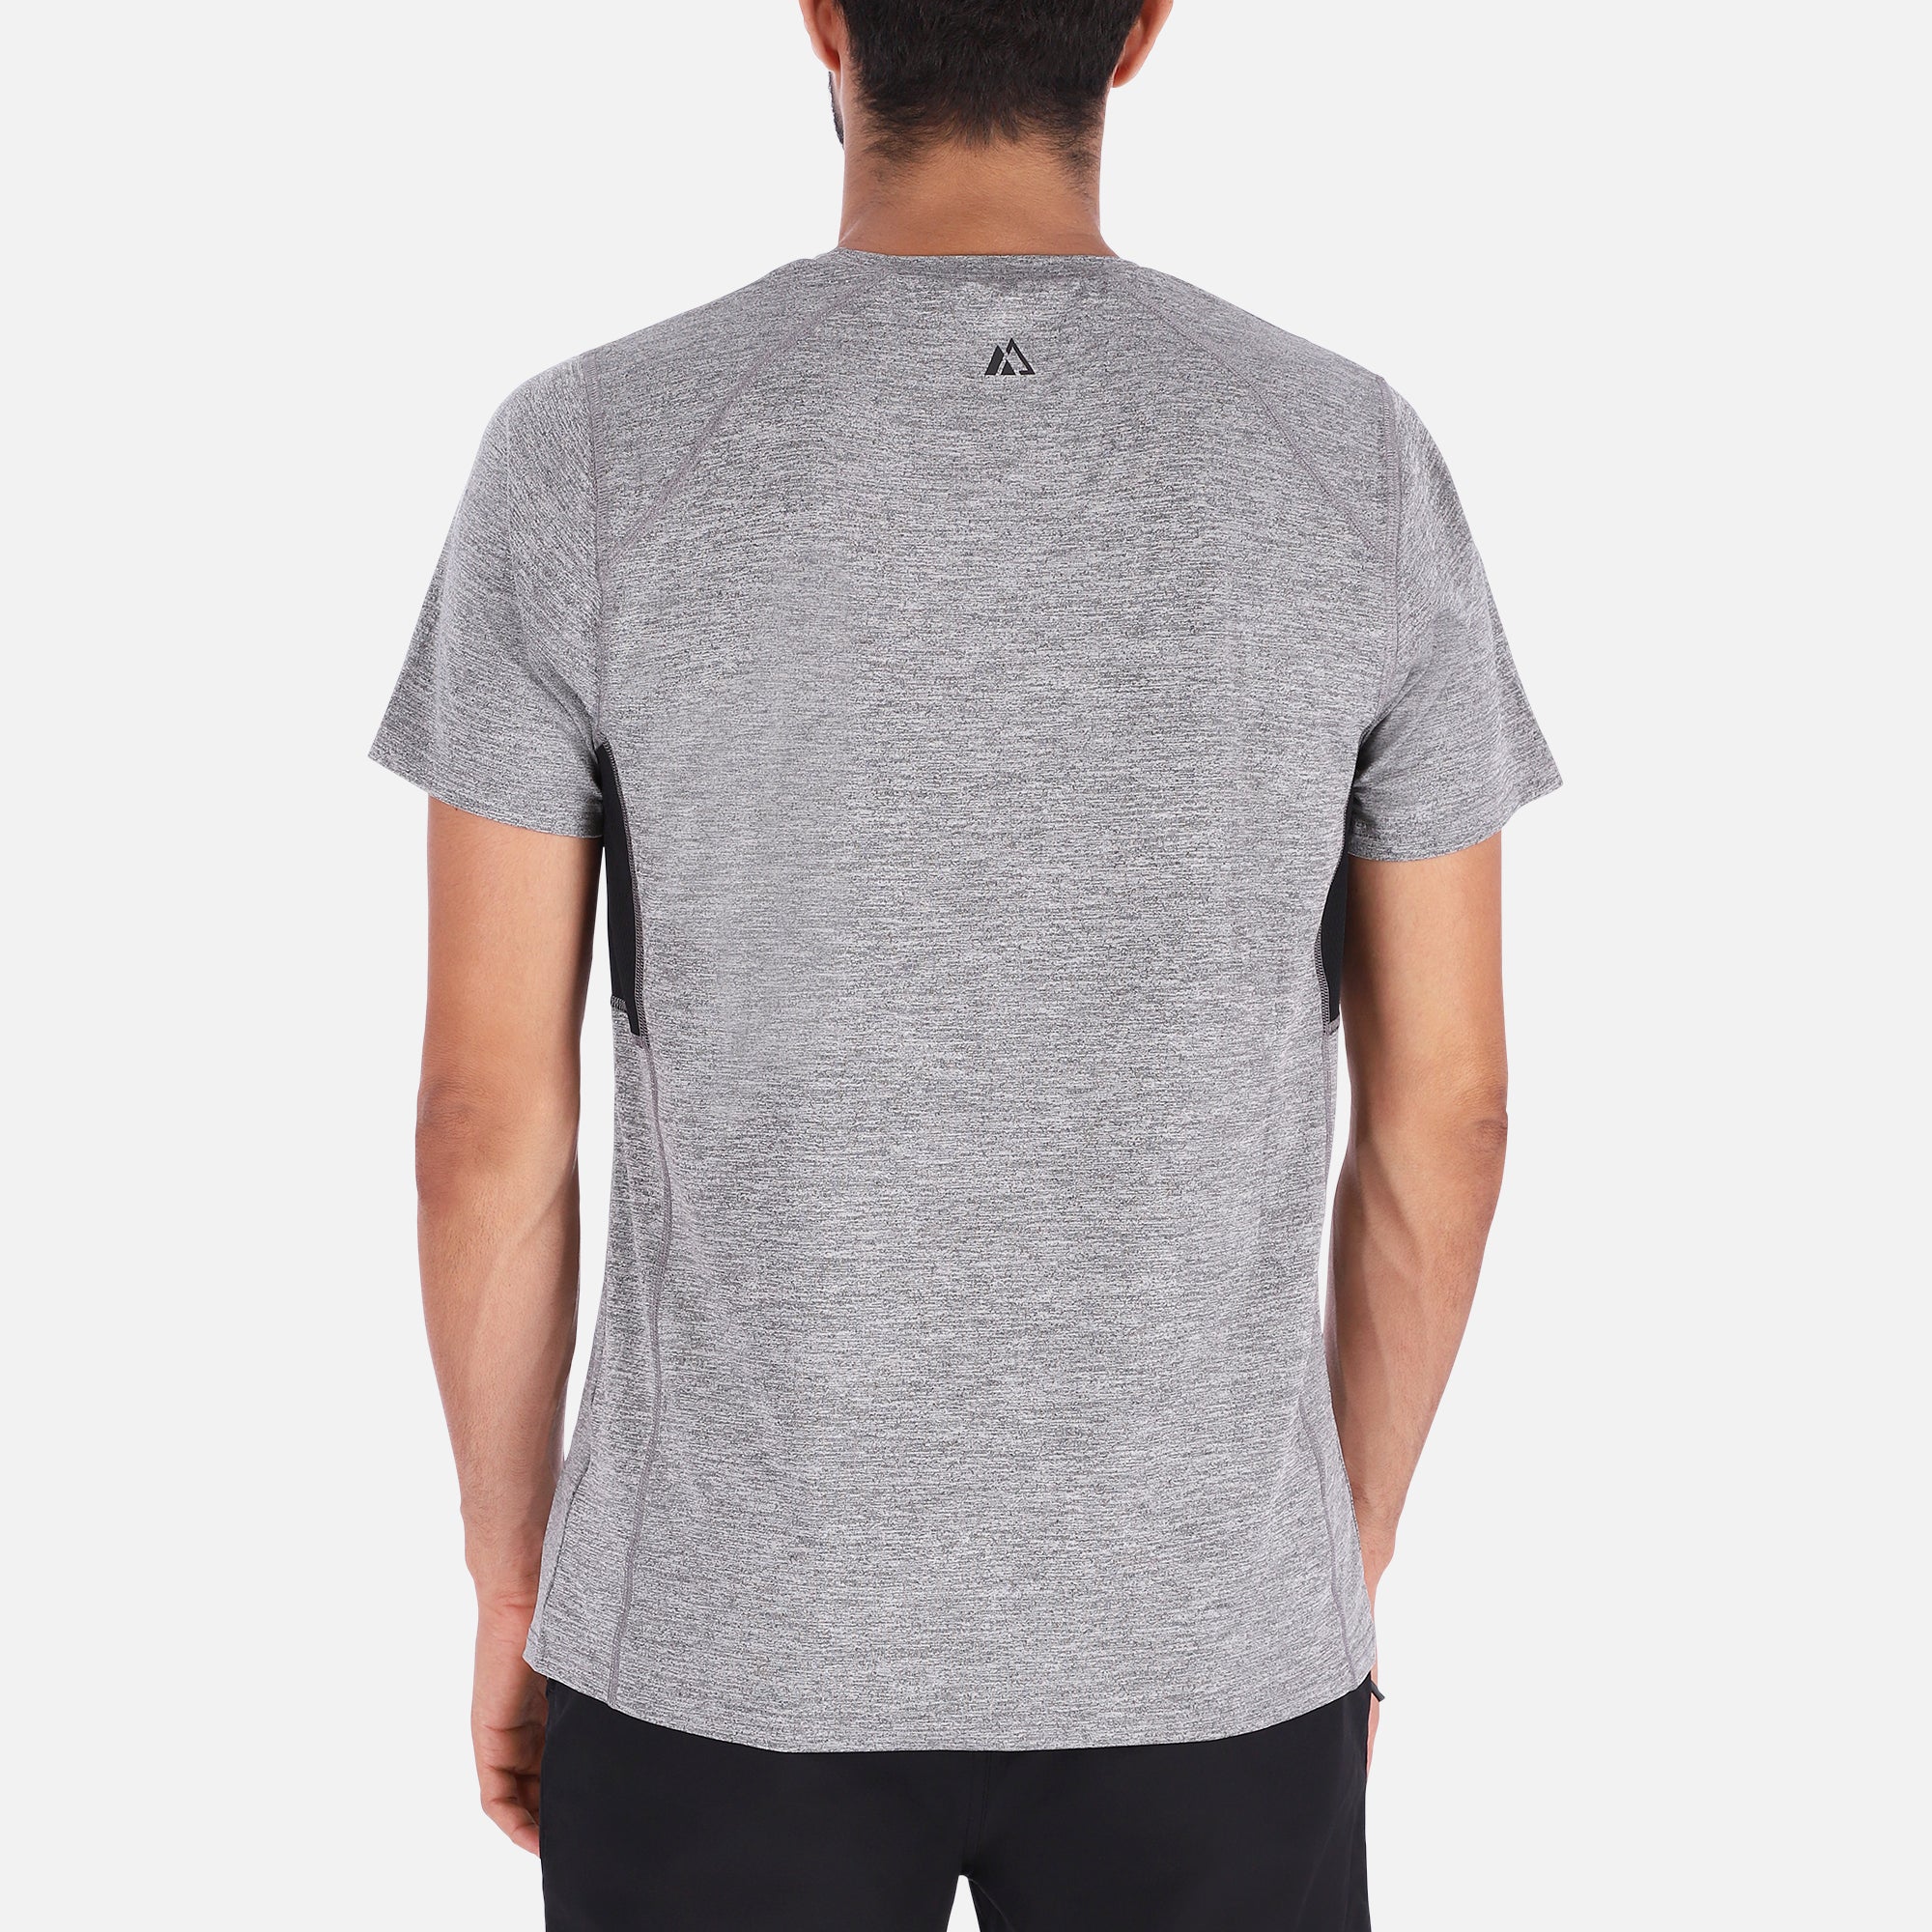 QuickDry Shirt - Gray